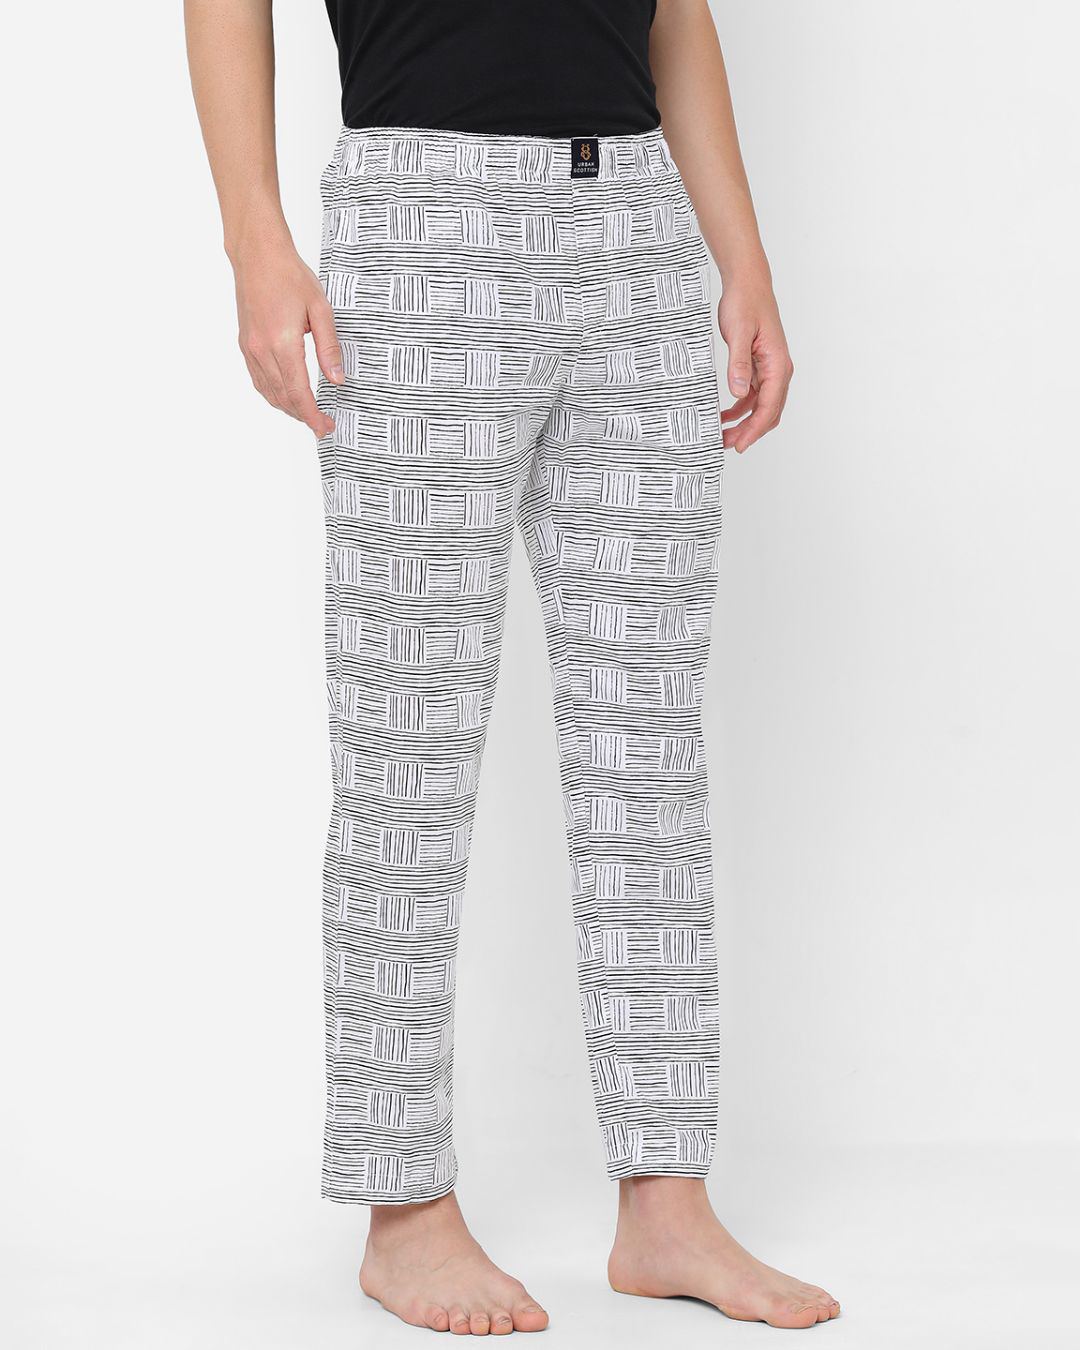 Jockey Women's Cotton Lounge Pants Bottom combed cotton elastane stretch  fabric | eBay